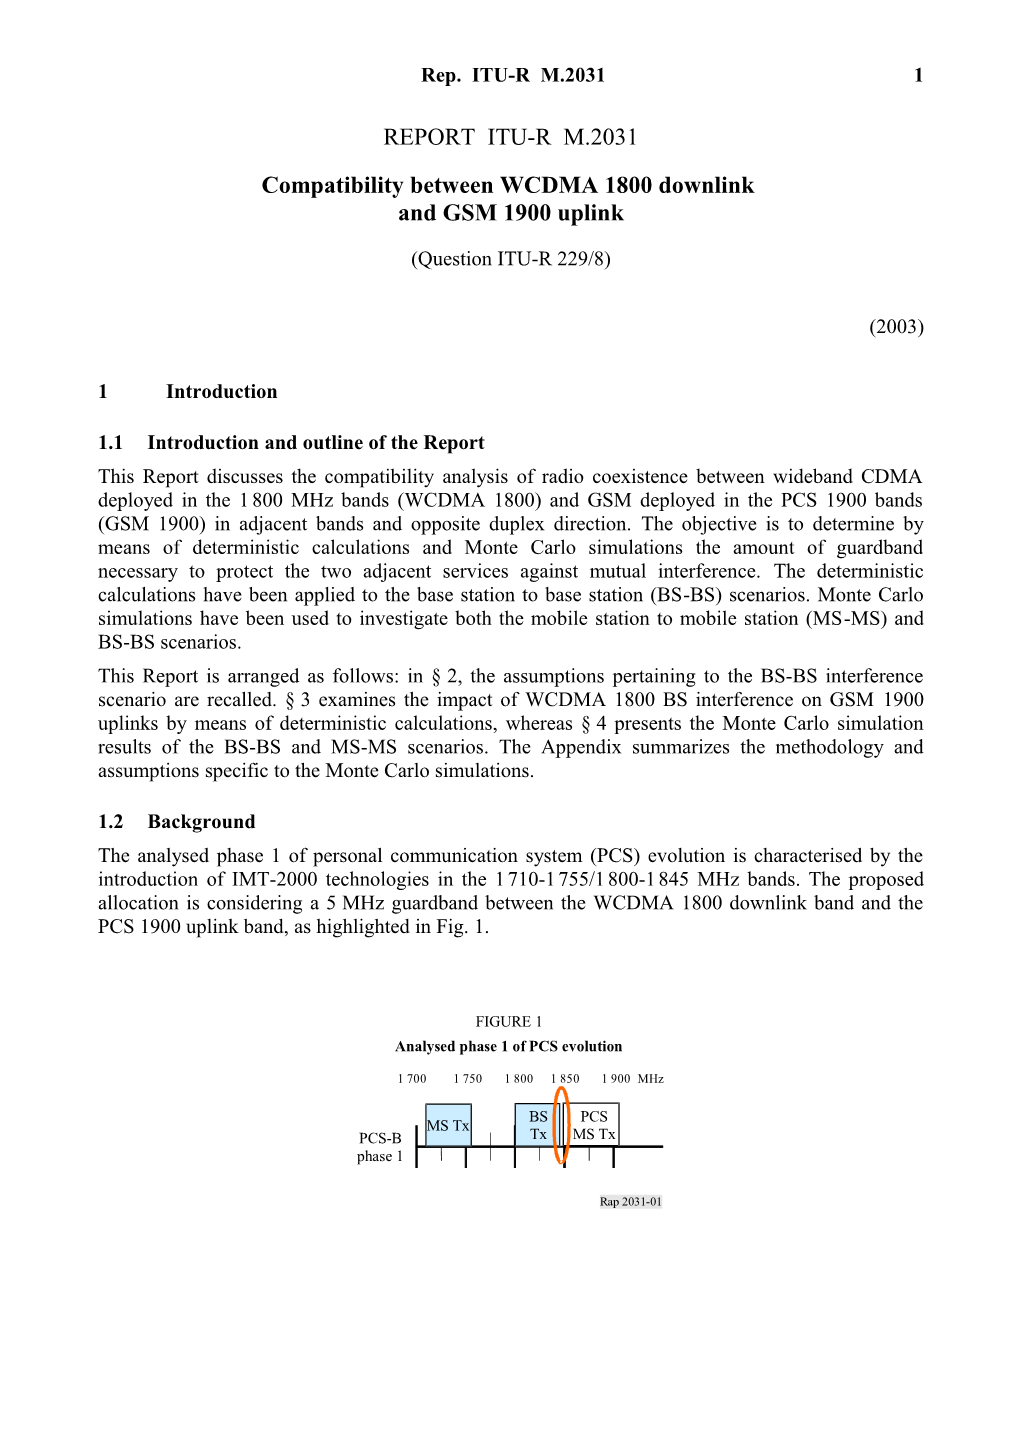 REPORT ITU-R M.2031 - Compatibility Between WCDMA 1800 Downlink and GSM 1900 Uplink